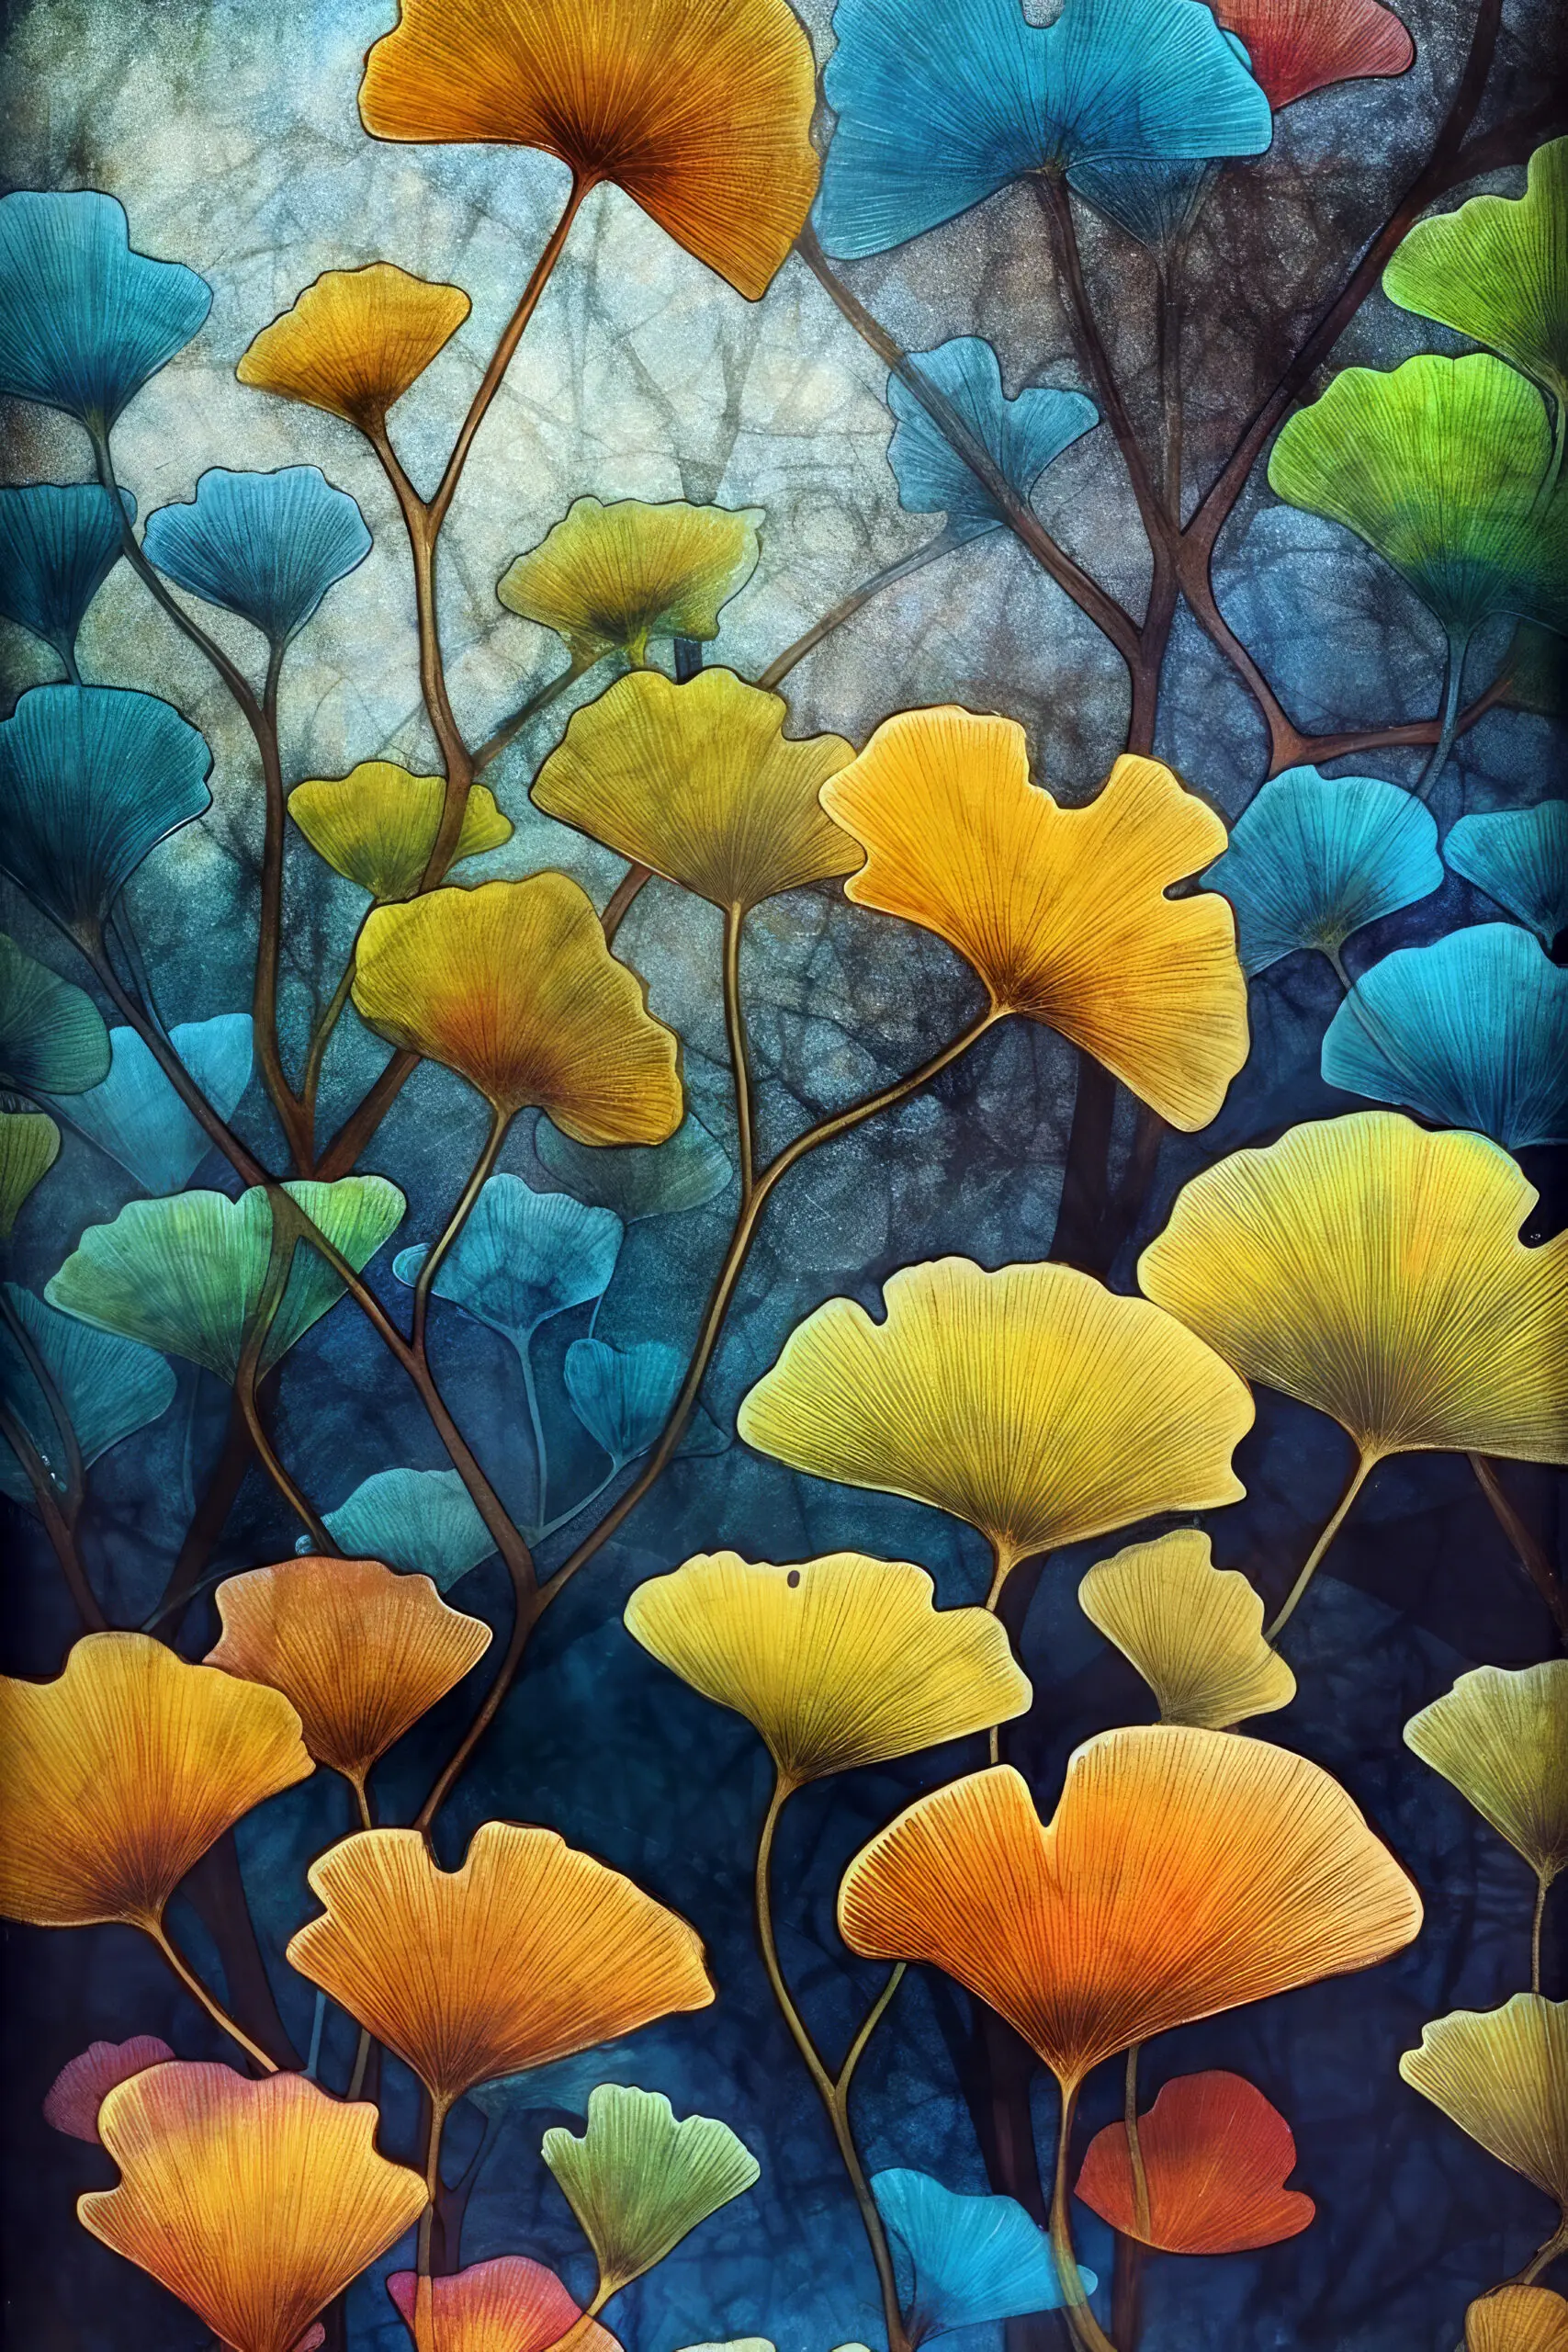 Wandbild (21914) Ginko Biloba leaves 3 by Justyna Jaszke präsentiert: Kreatives,Natur,Blätter,Blumen und Blüten